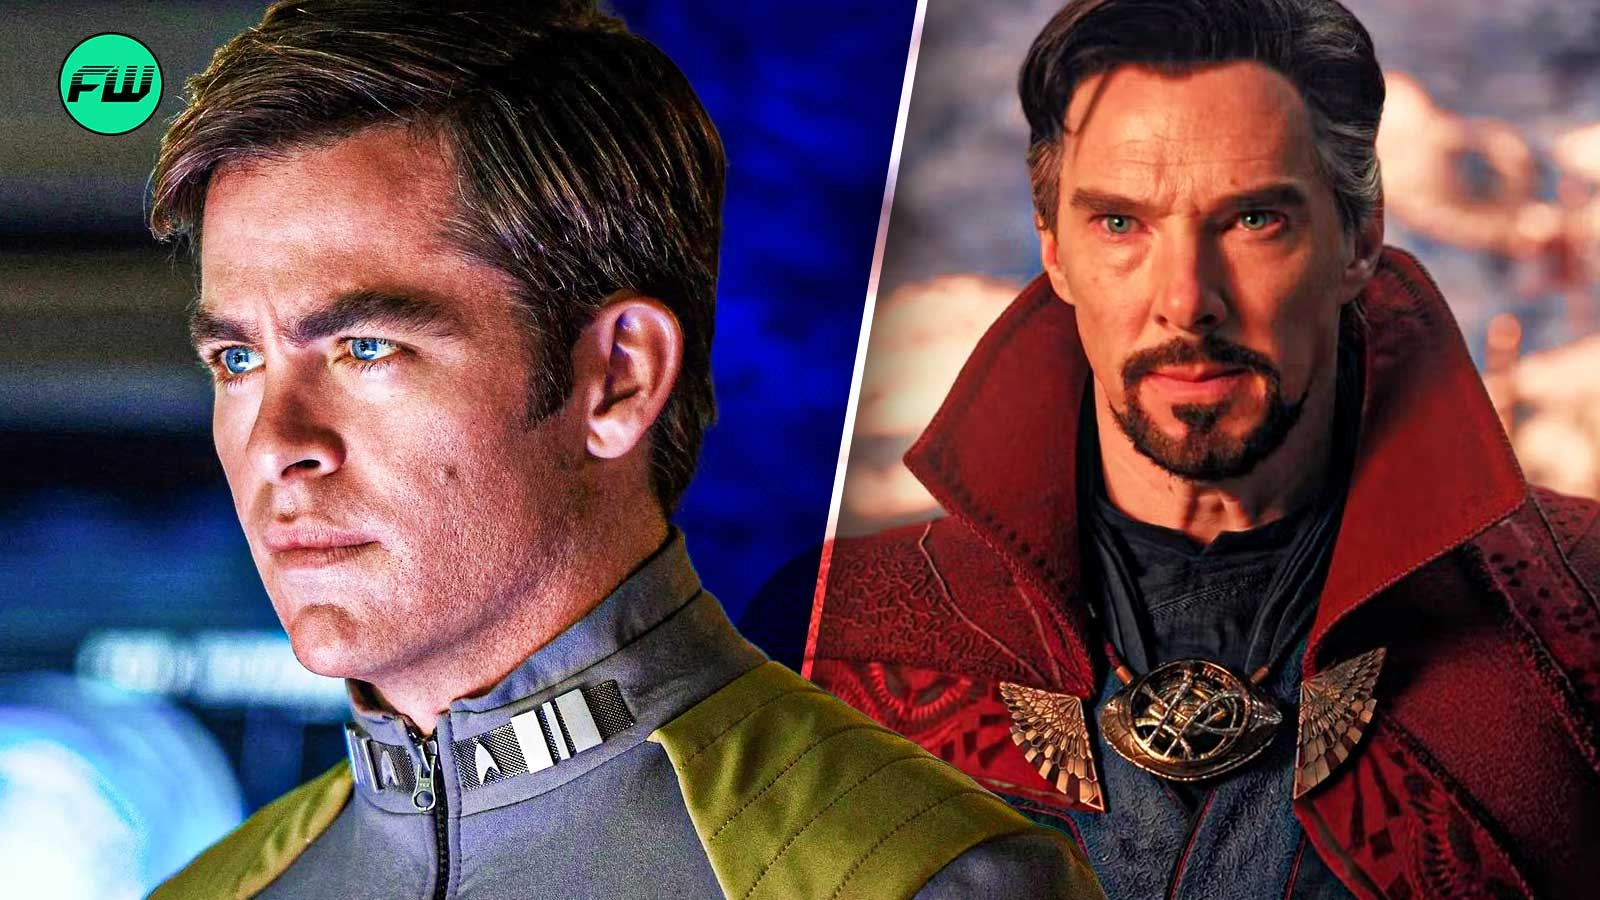 “Because he’s such a good actor”: The director thinks Marvel star Chris Pine’s Star Trek really failed as a villain